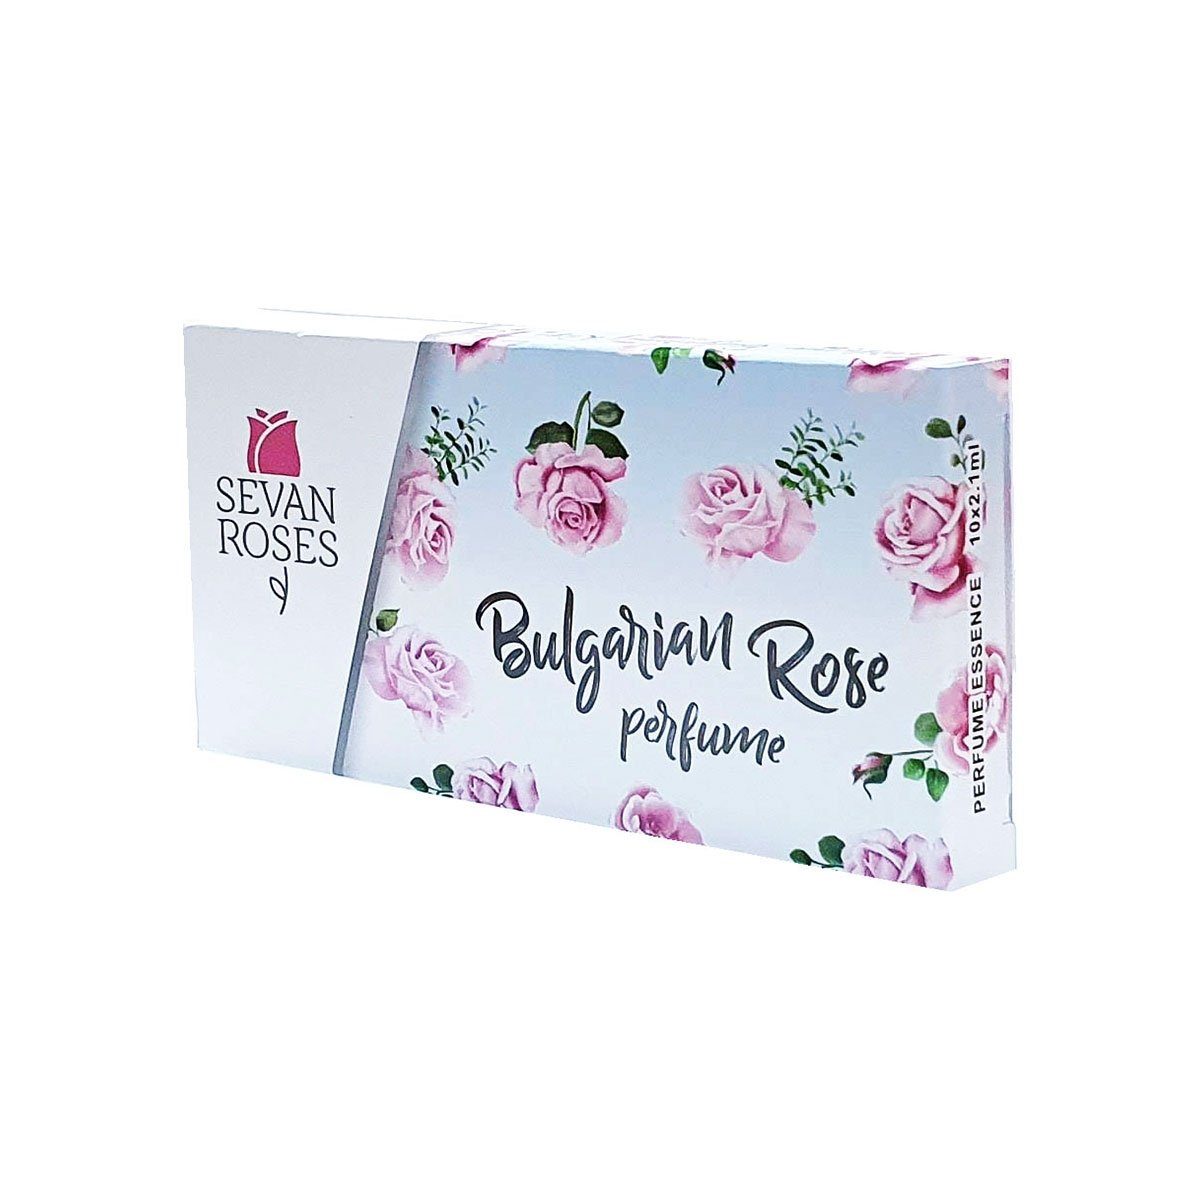 Eau ml, 10-tlg. Parfüm Rose Parfum Sevan Roses 10 ampullen Sevan Rose Bulgarian 2.1 de x